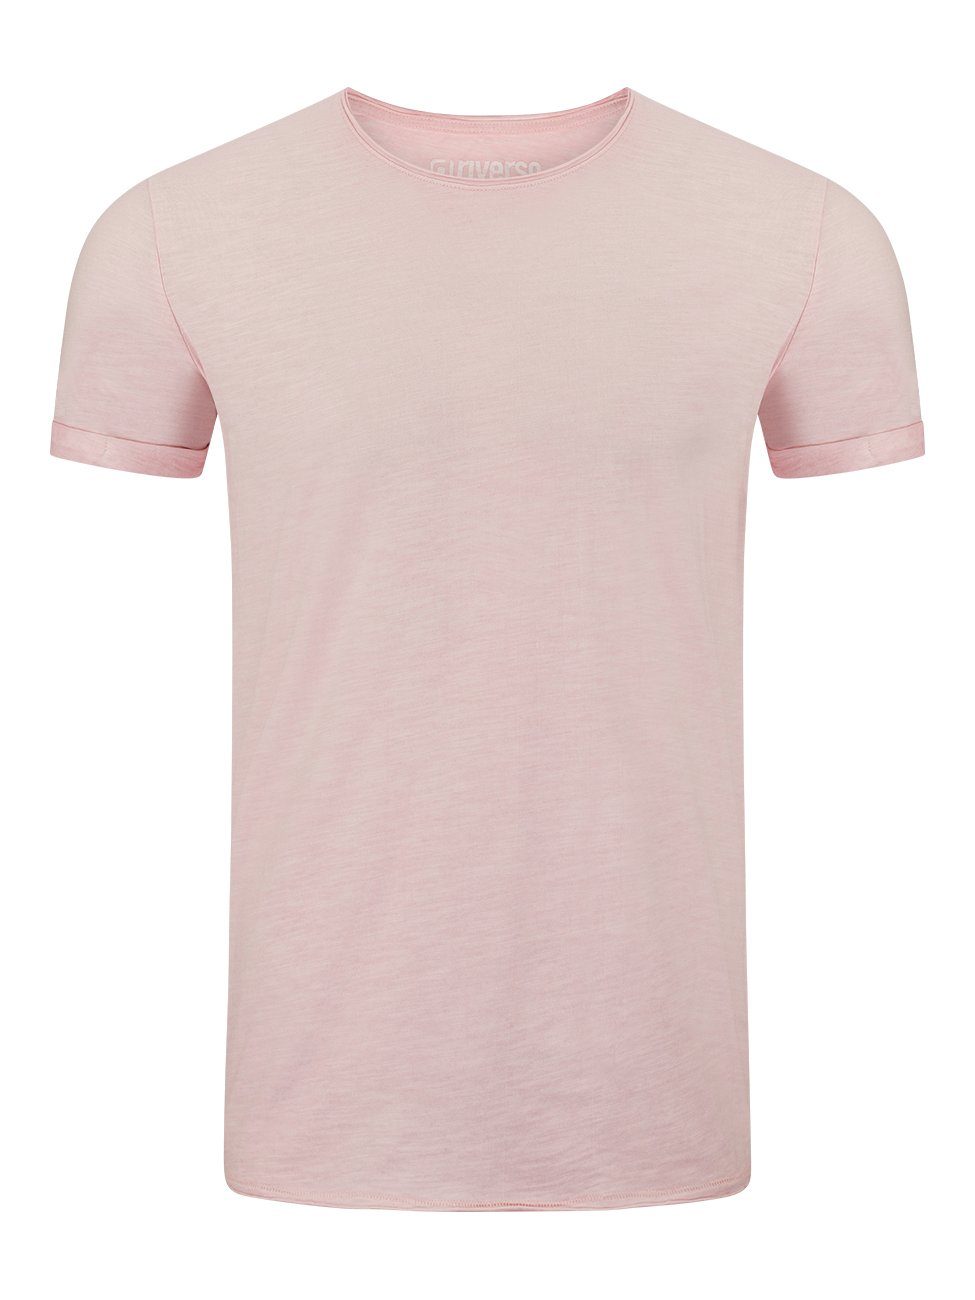 riverso T-Shirt RIVMatteo O-Neck 3 Farbmix 100% (4-tlg) Baumwolle